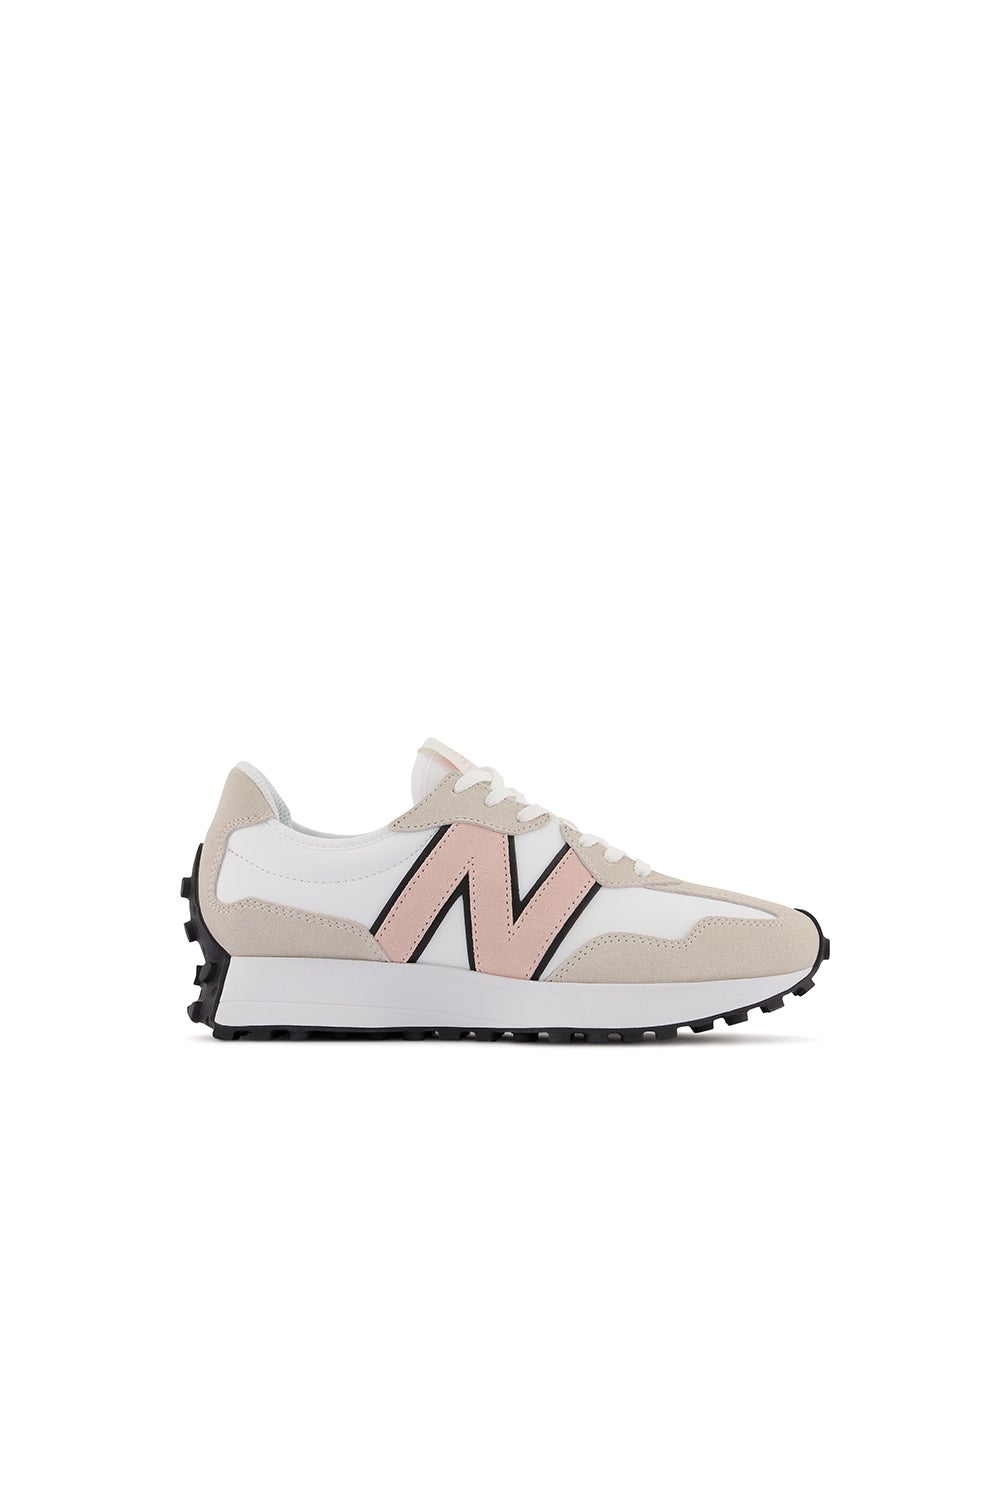 New Balance 327 White with Pink Haze